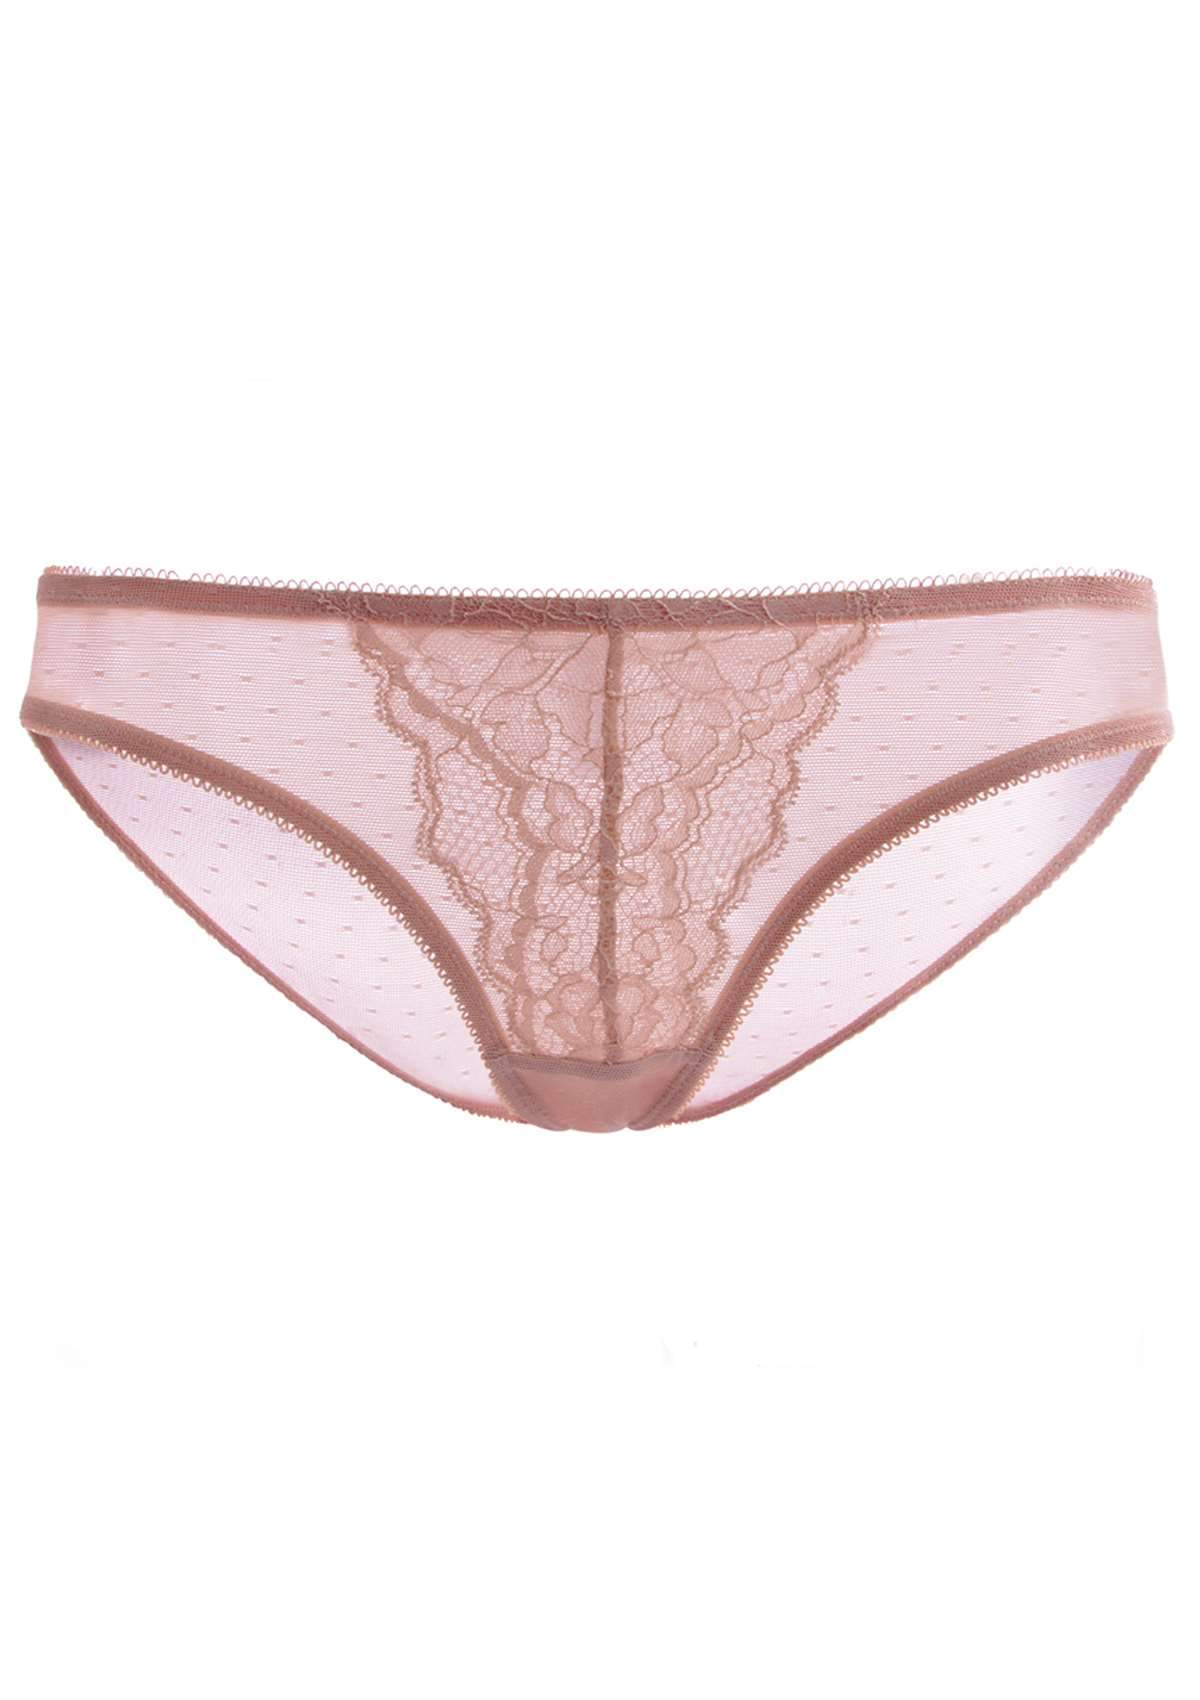 HSIA Enchante Sheer Lace Mesh Mid Rise Bikini Underwear - XL / Dark Pink